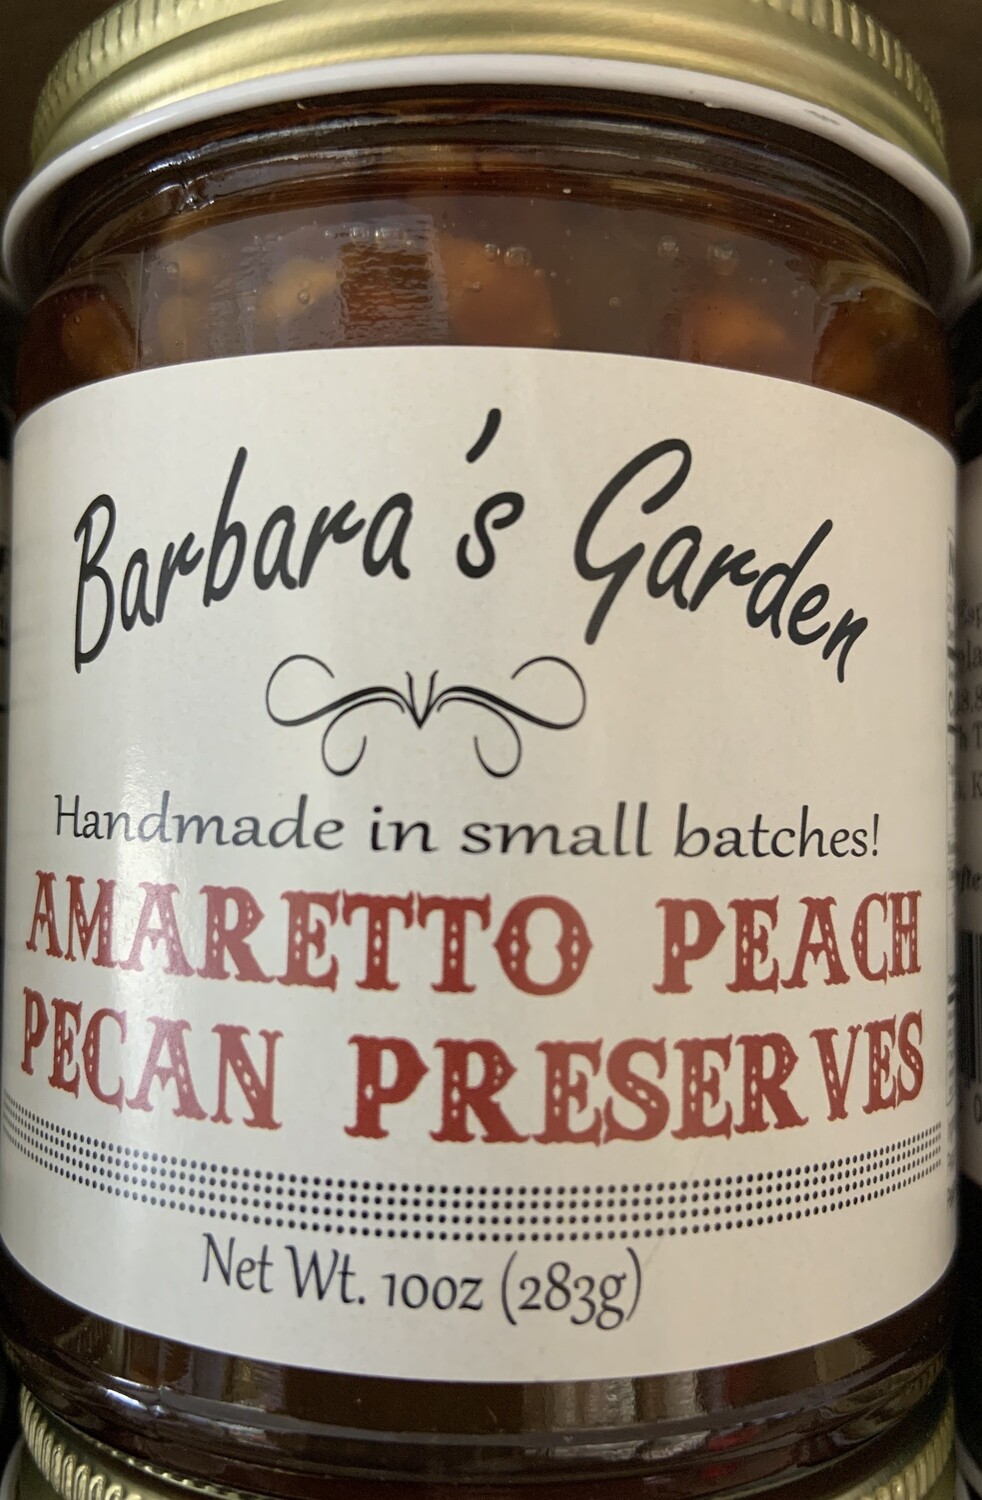 Barbara's Garden Amaretto Peach Pecan Preserves 10 oz